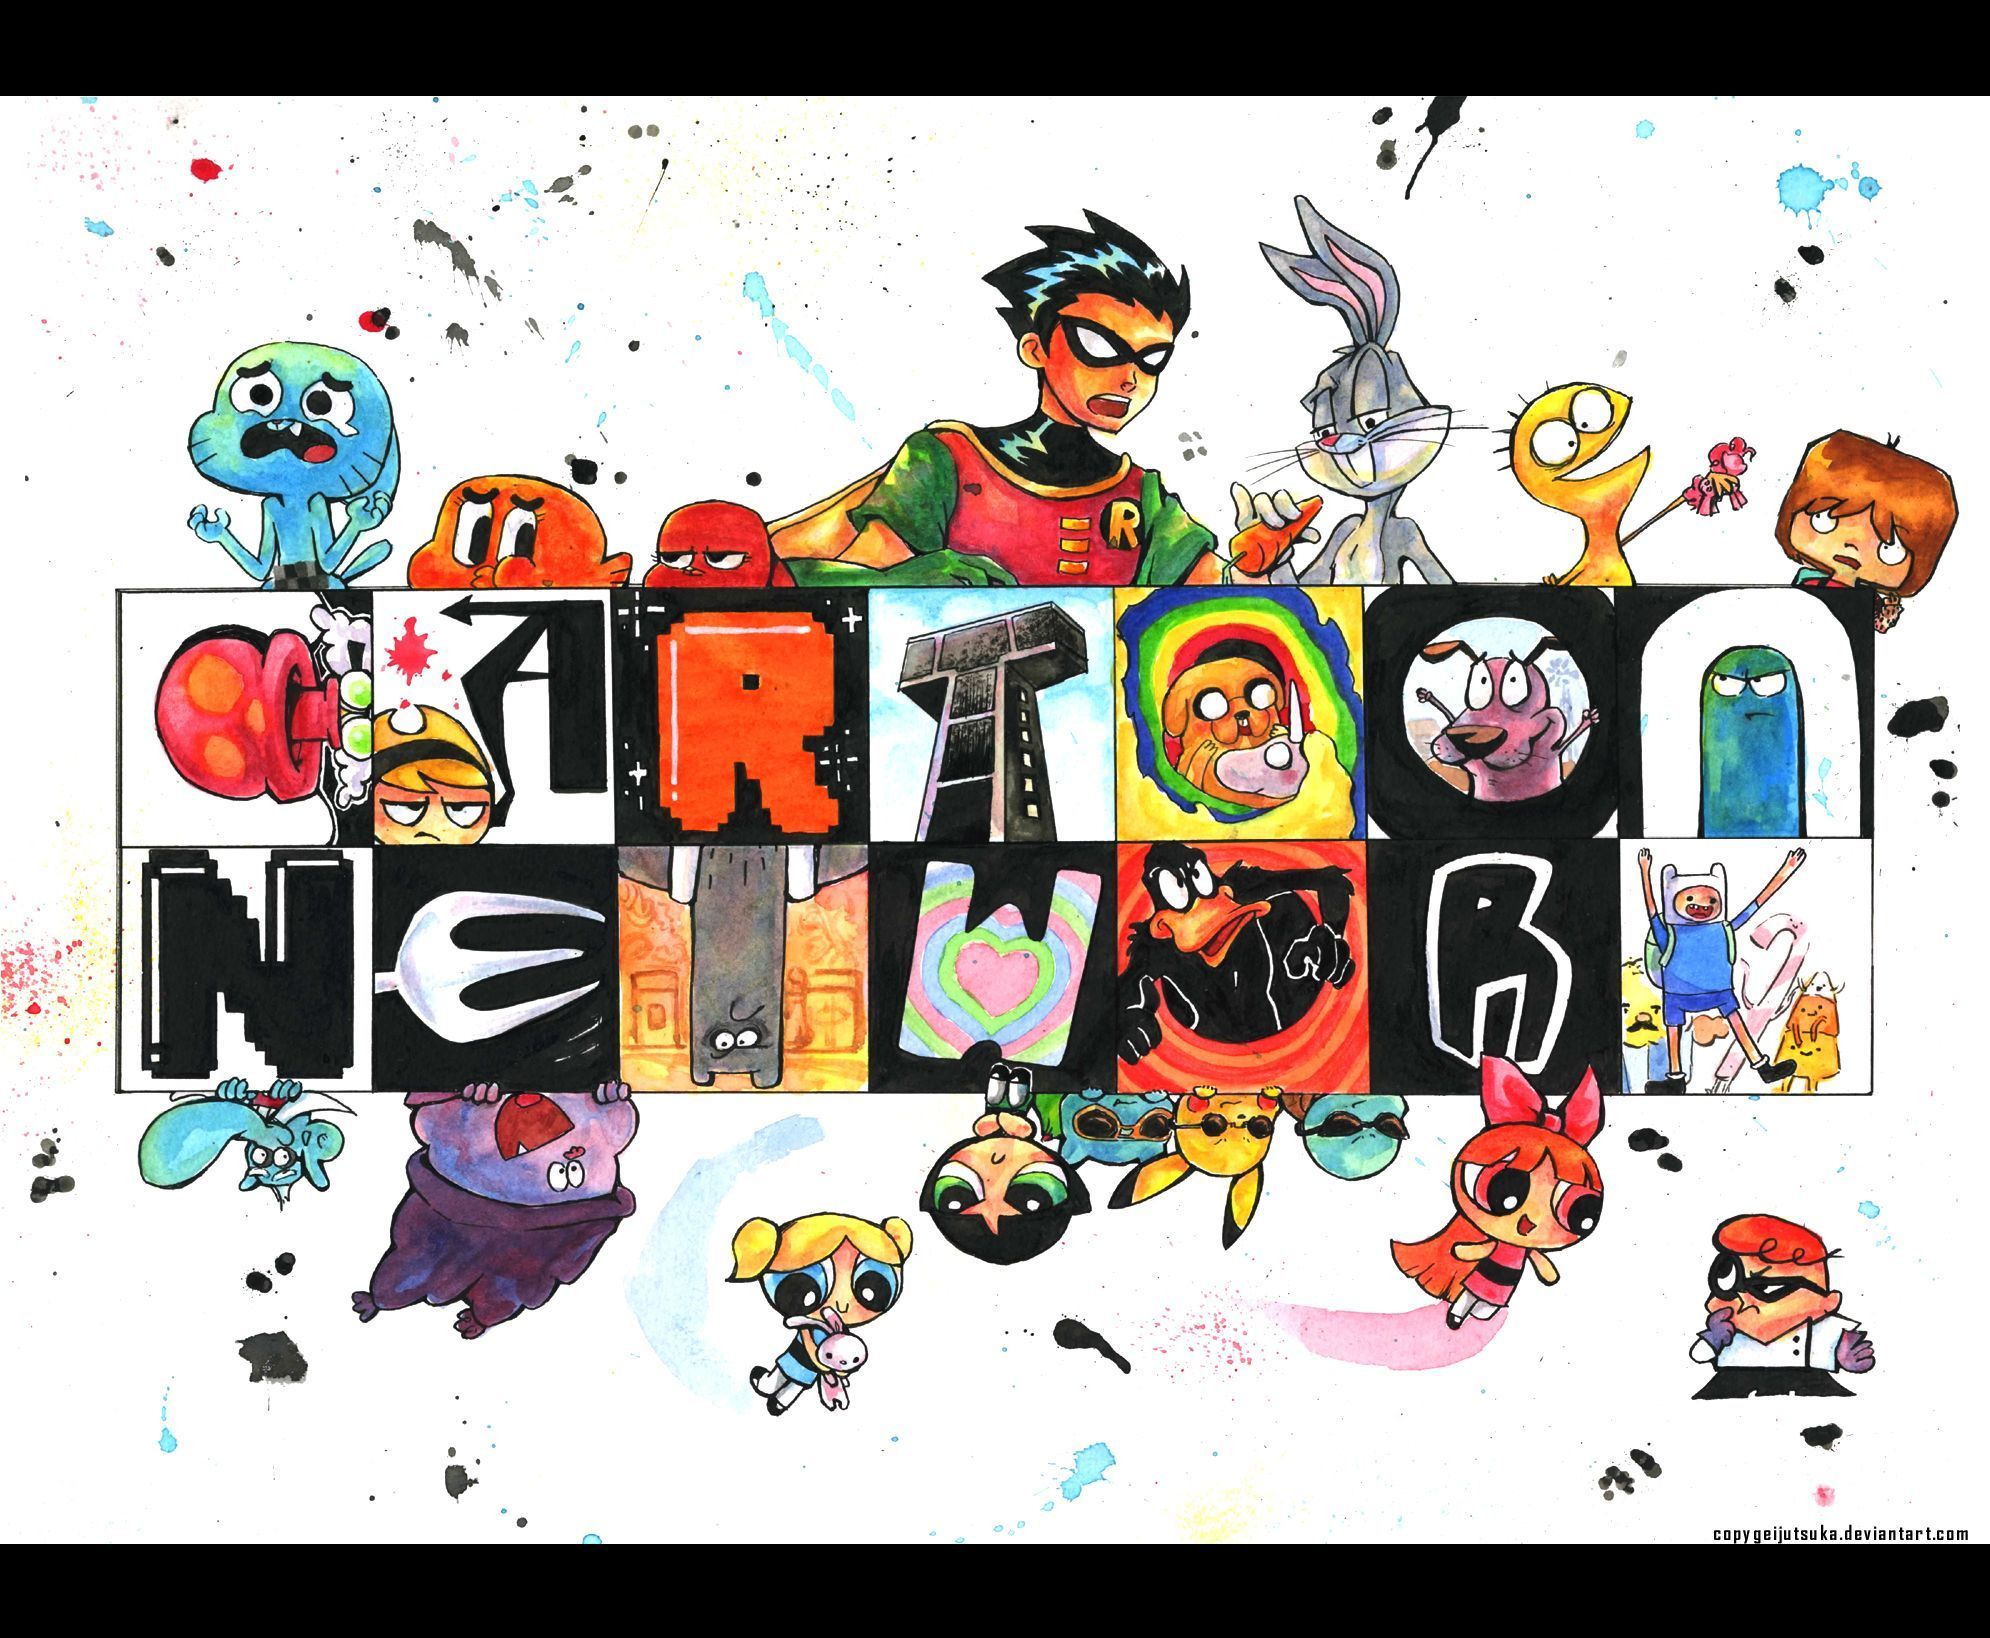 1080p Cartoon Network Wallpaper HD